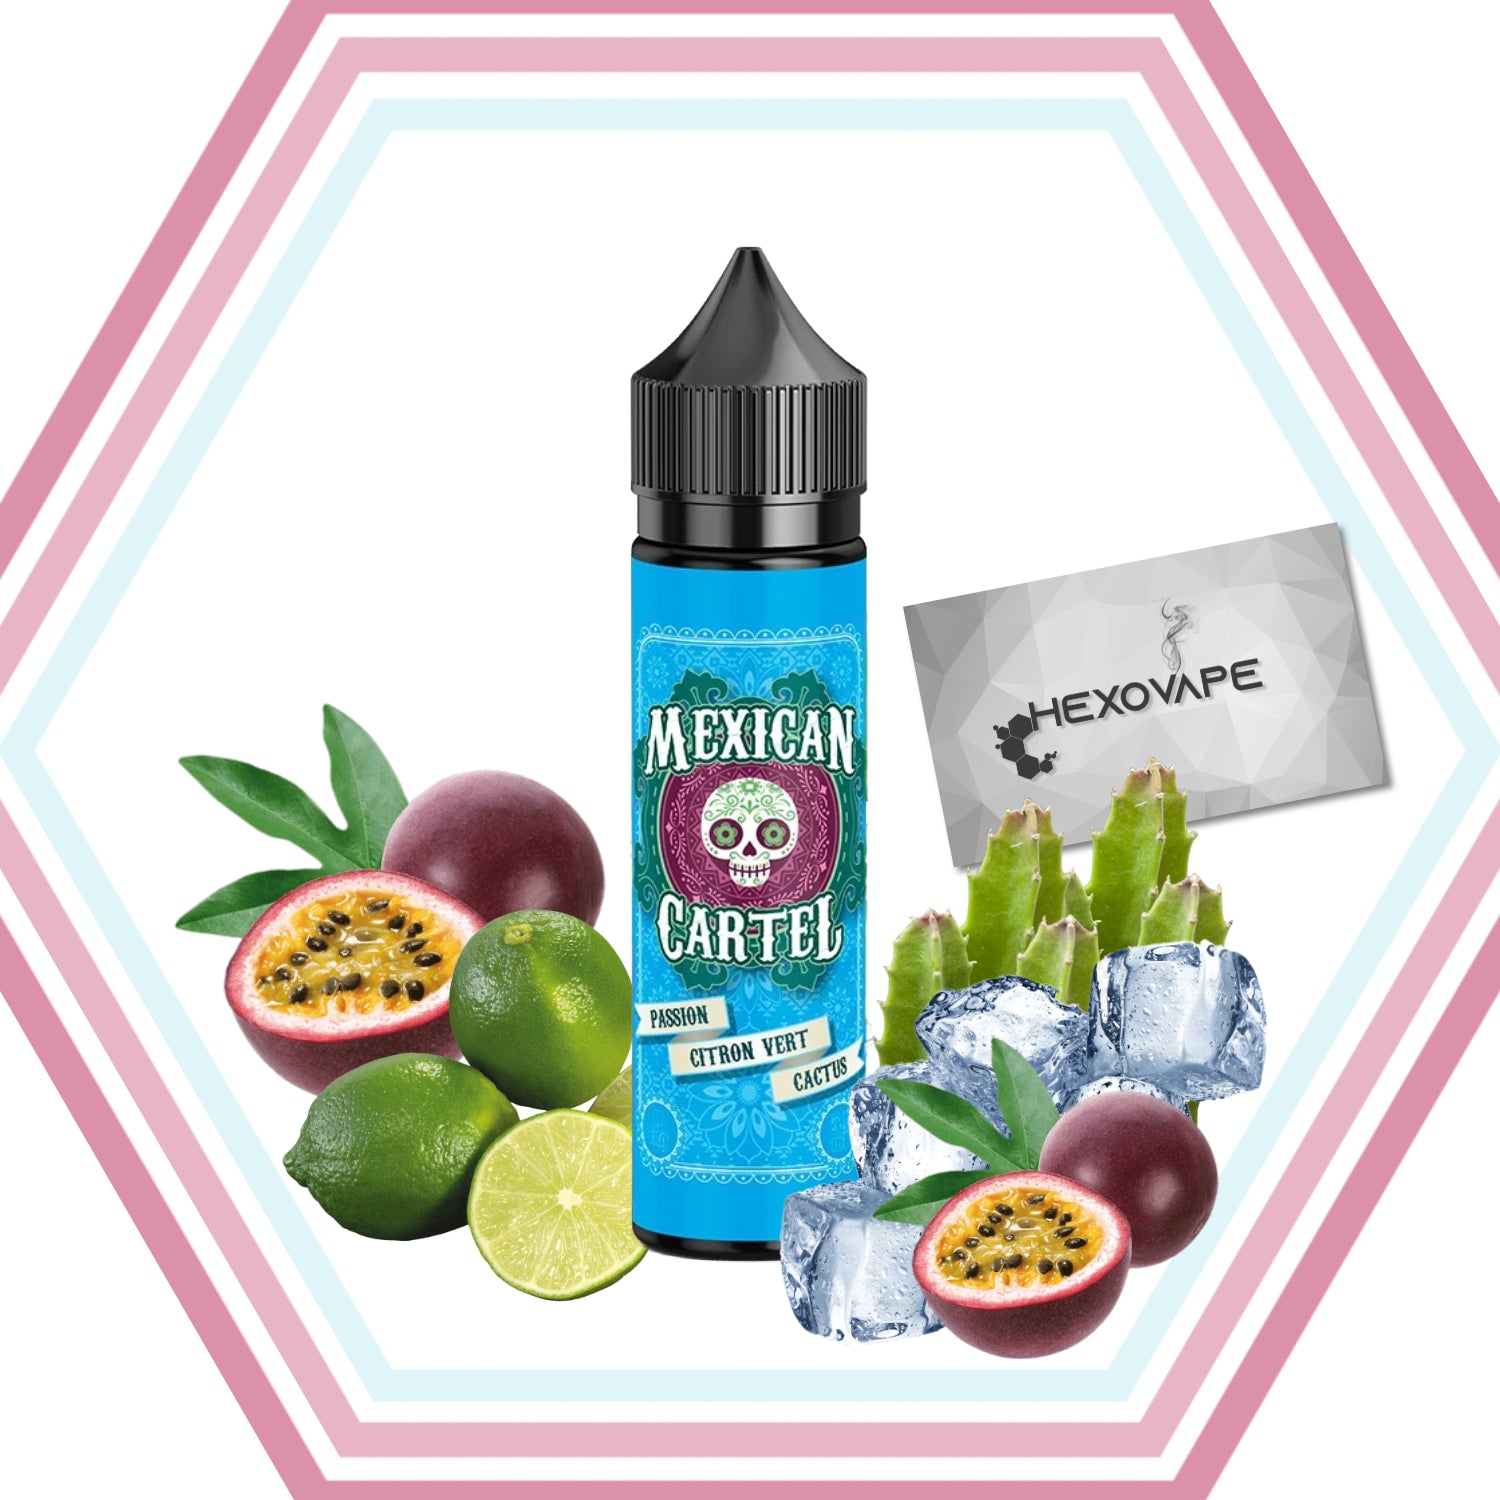 Passion Citron Vert Cactus 50 / 100ml - Mexican Cartel